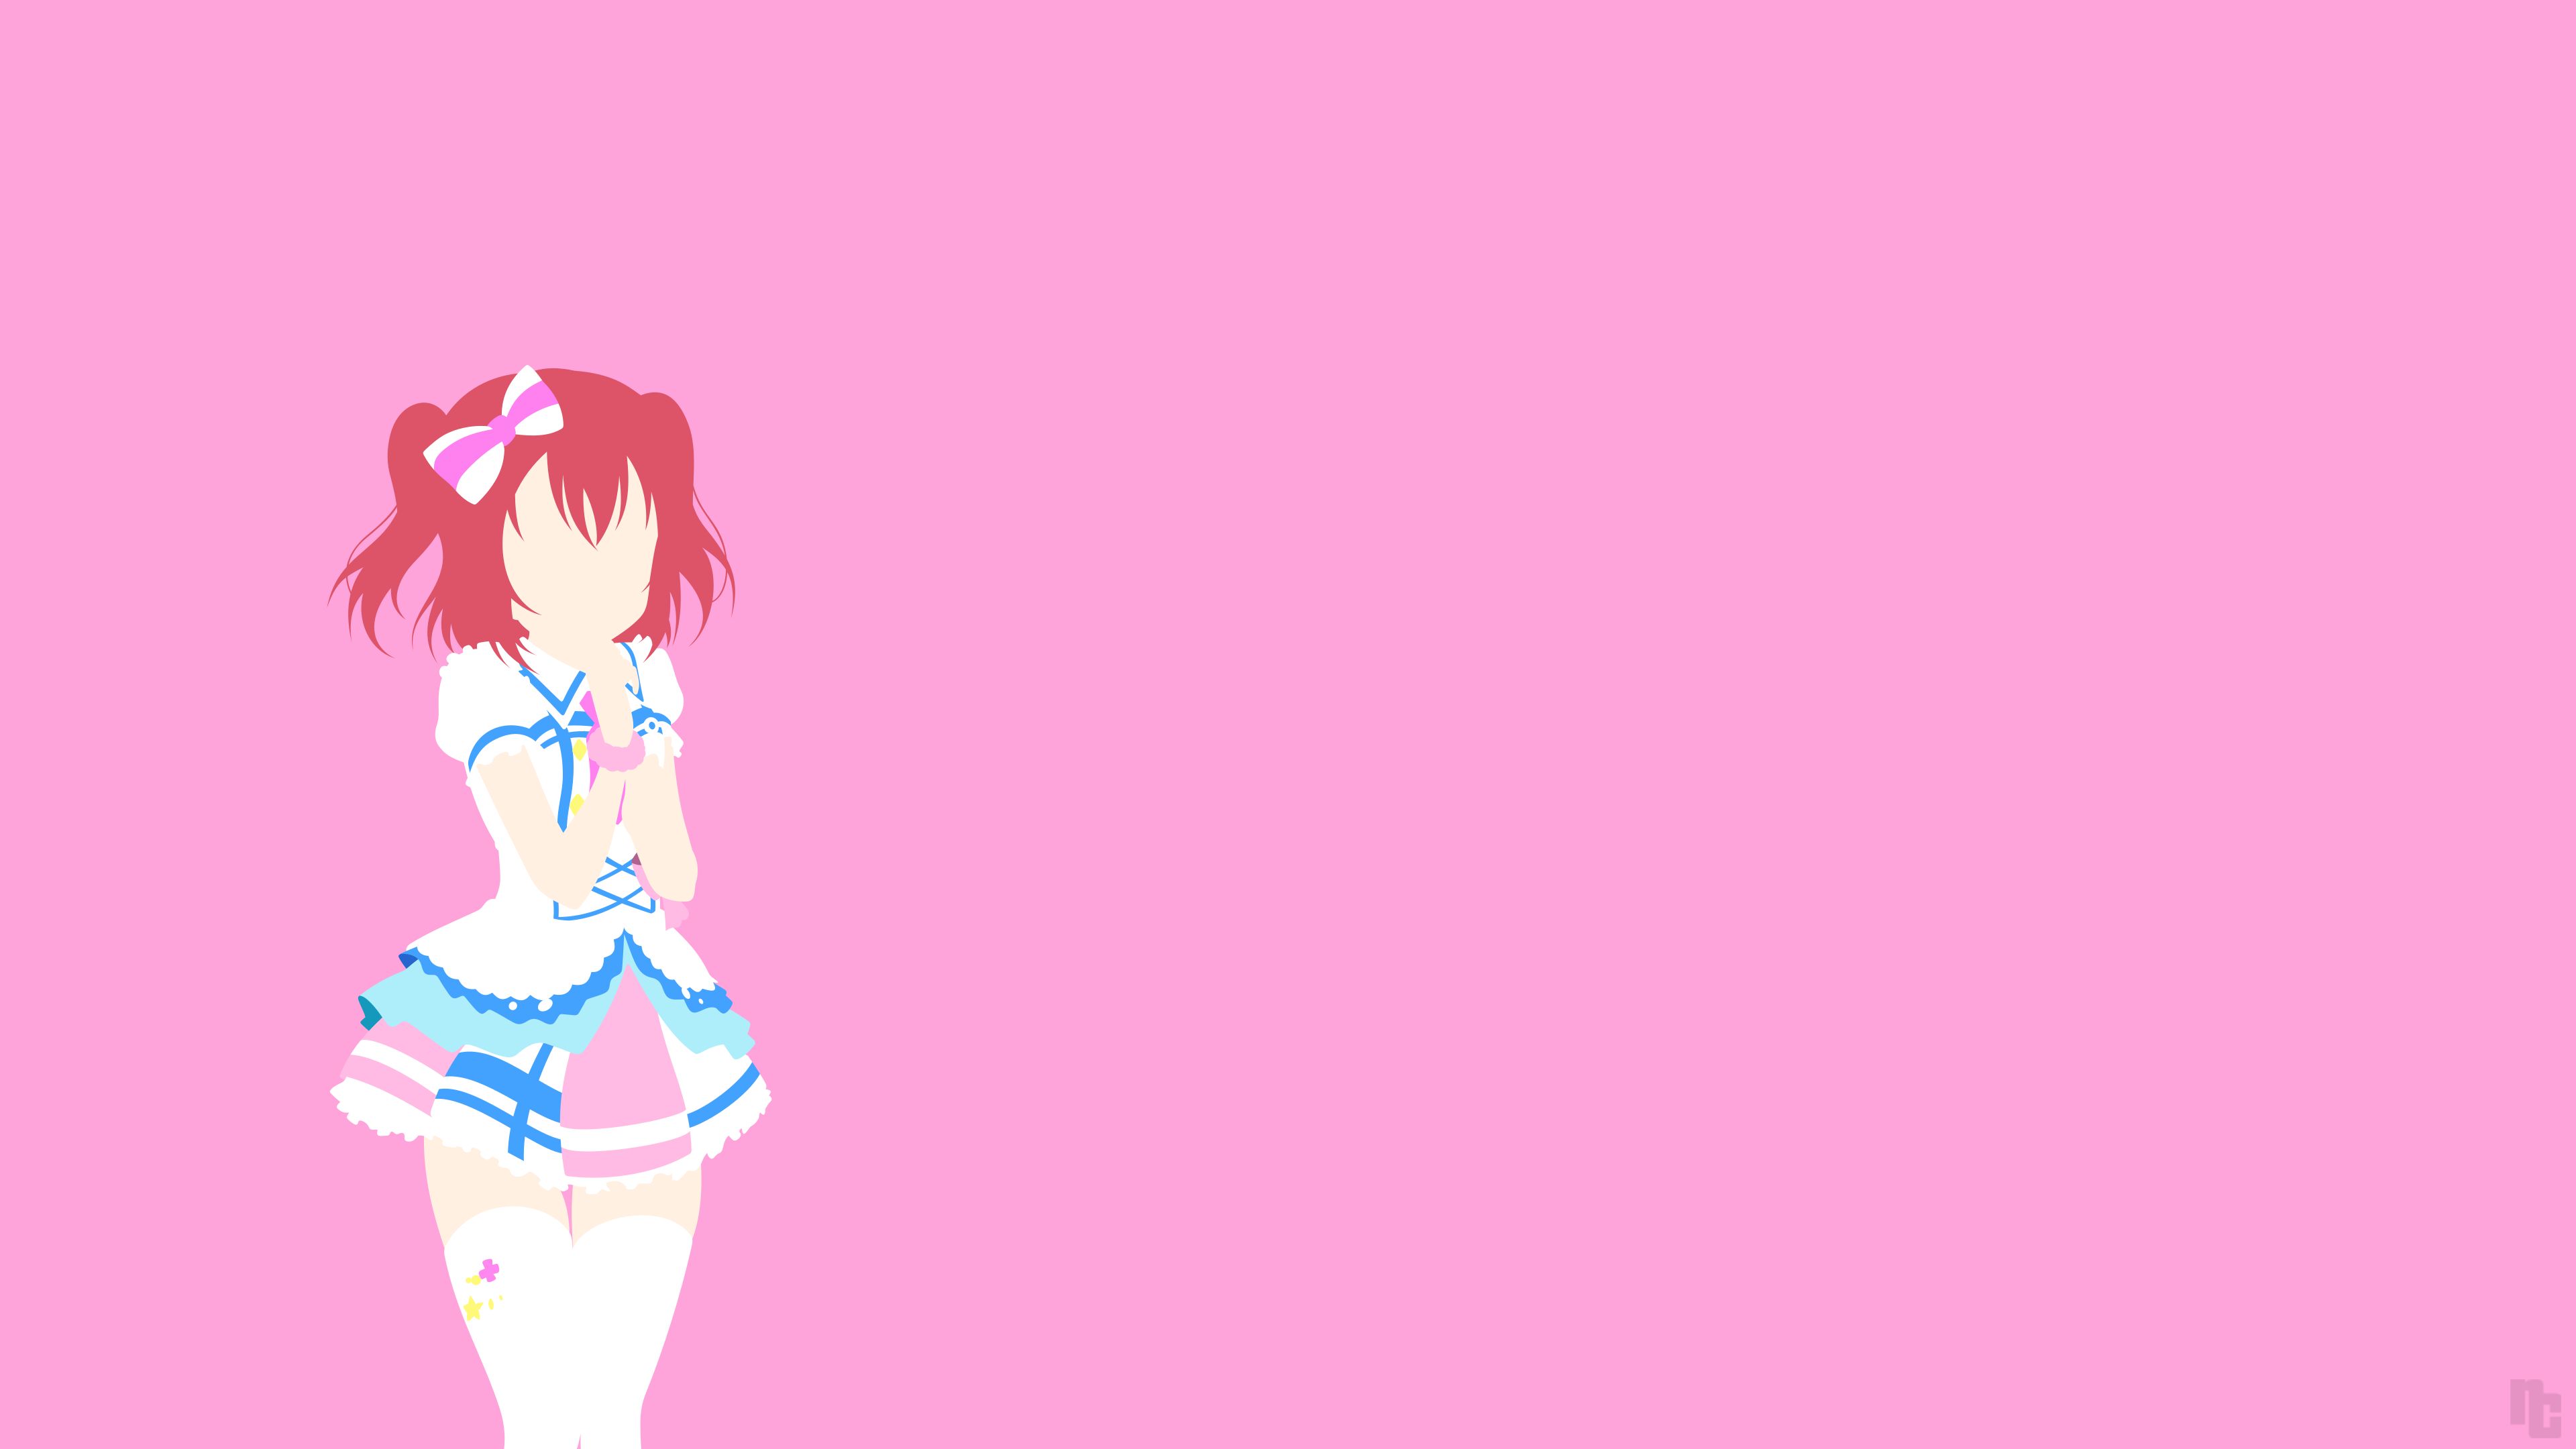 Free download wallpaper Anime, Love Live!, Love Live! Sunshine!!, Ruby Kurosawa on your PC desktop